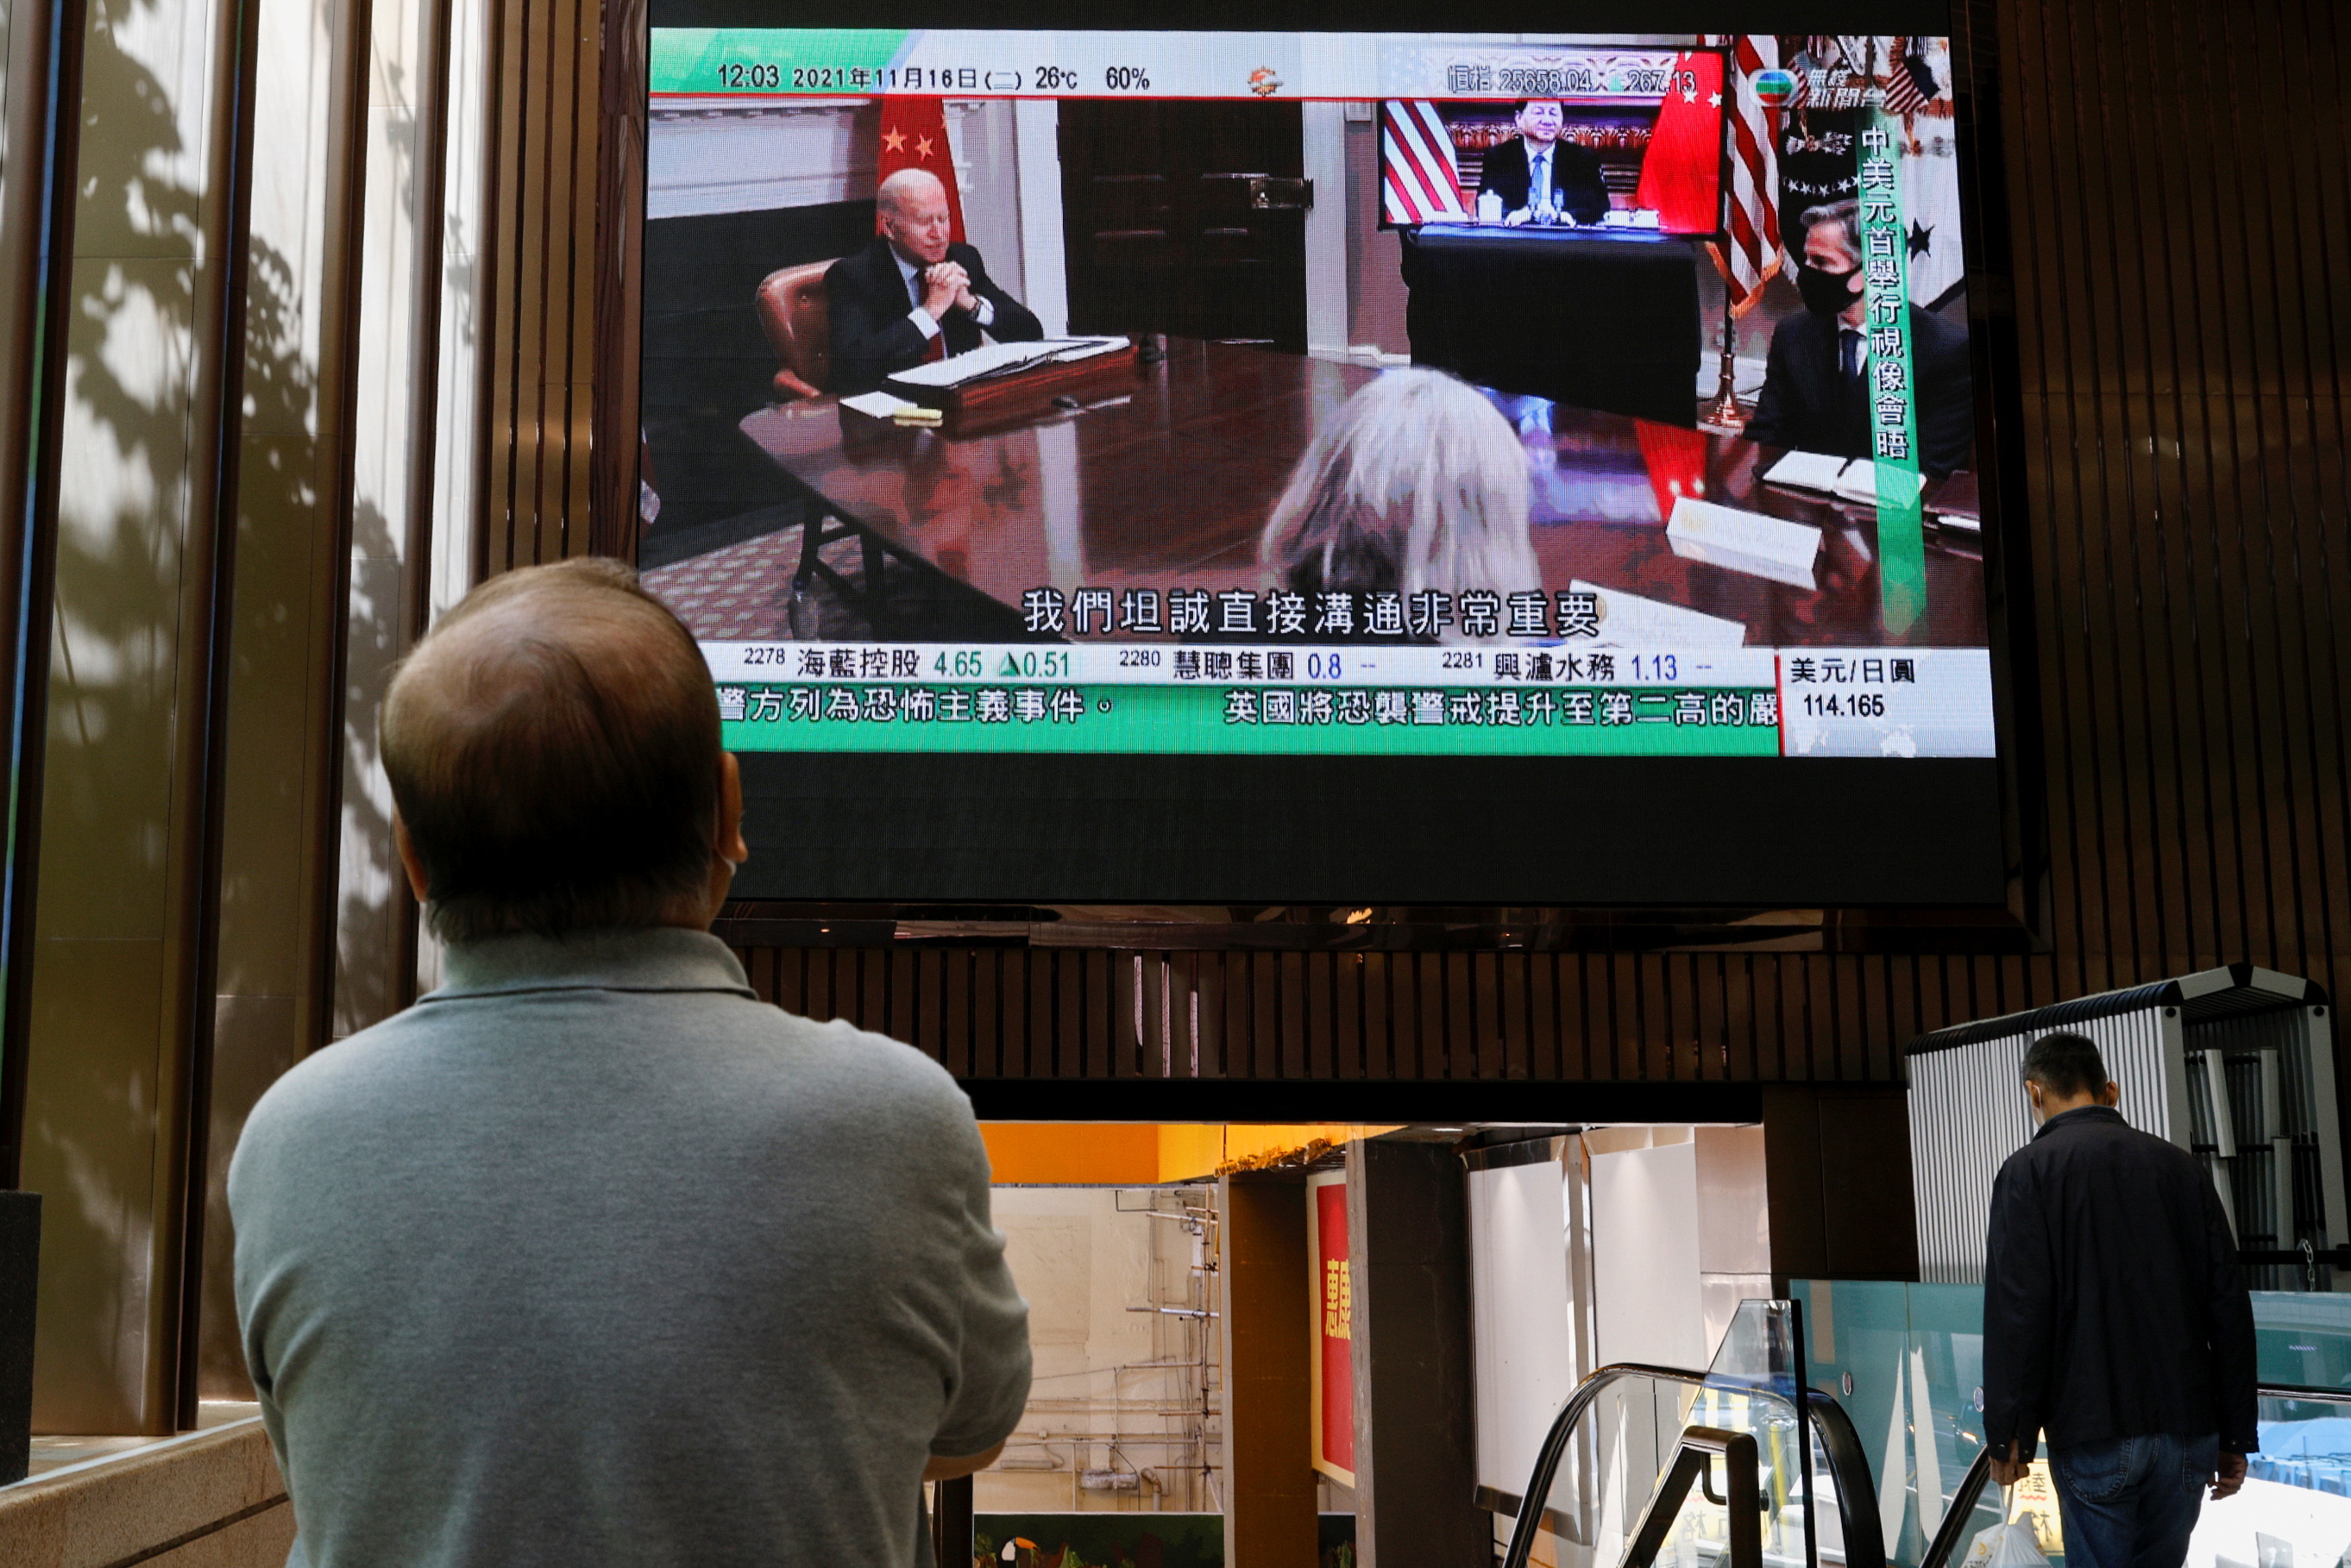 A TV screen shows news of a video meeting between U.S. President Joe Biden and Chinese President Xi Jinping, in Hong Kong